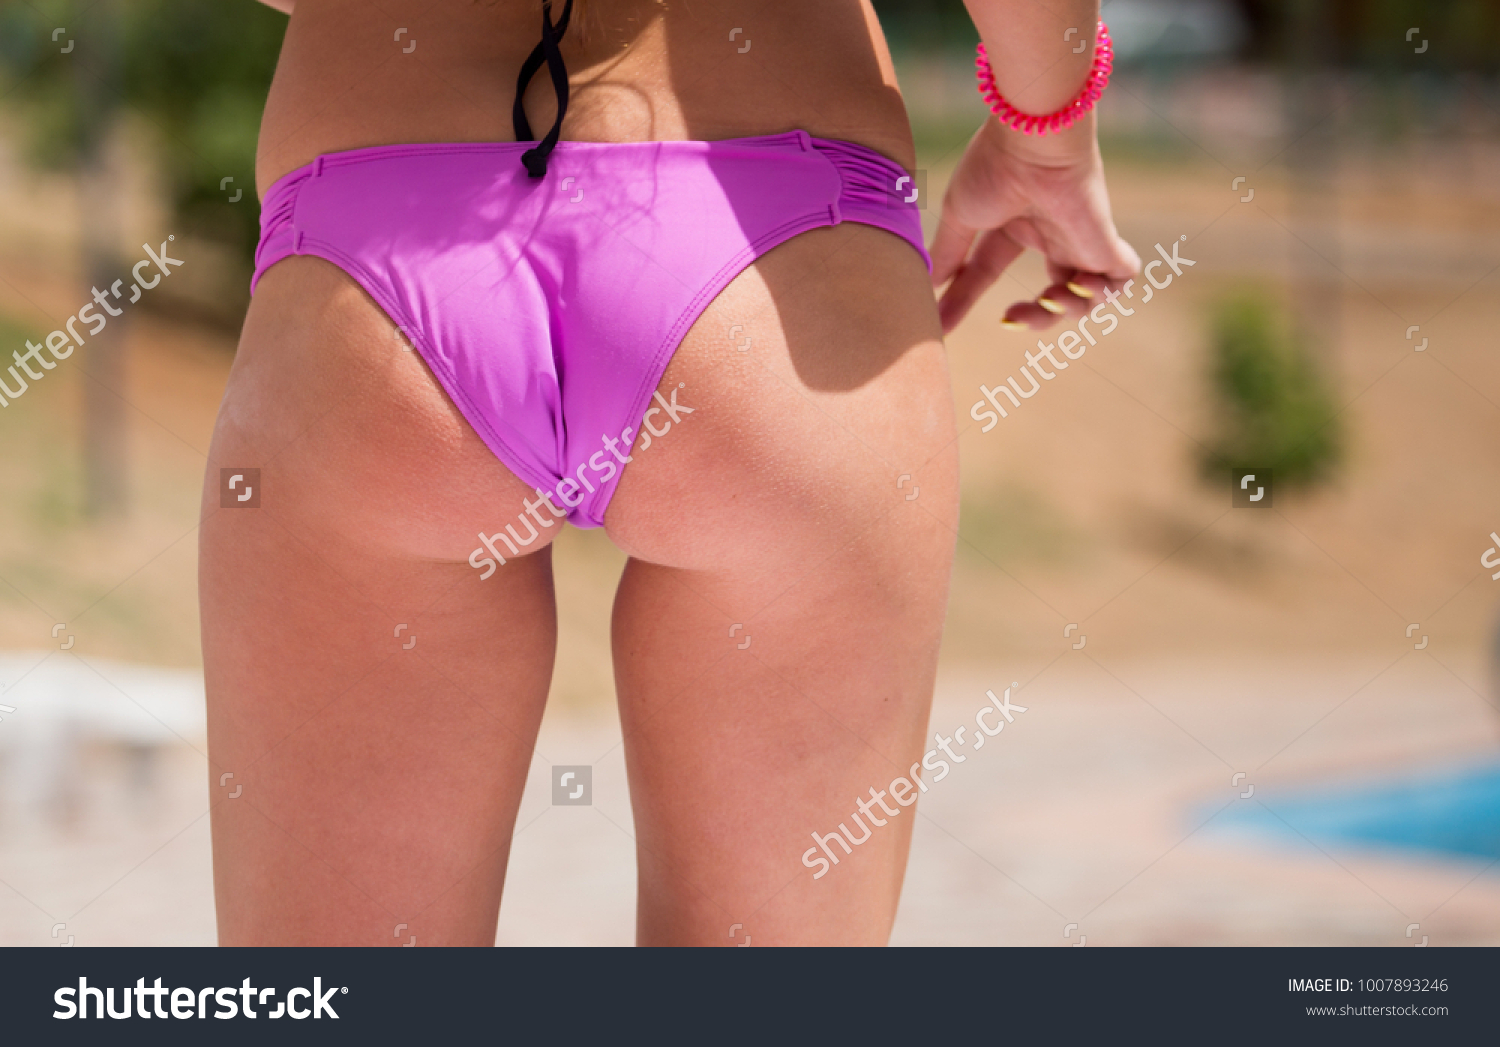 Girls Ass In Bikini